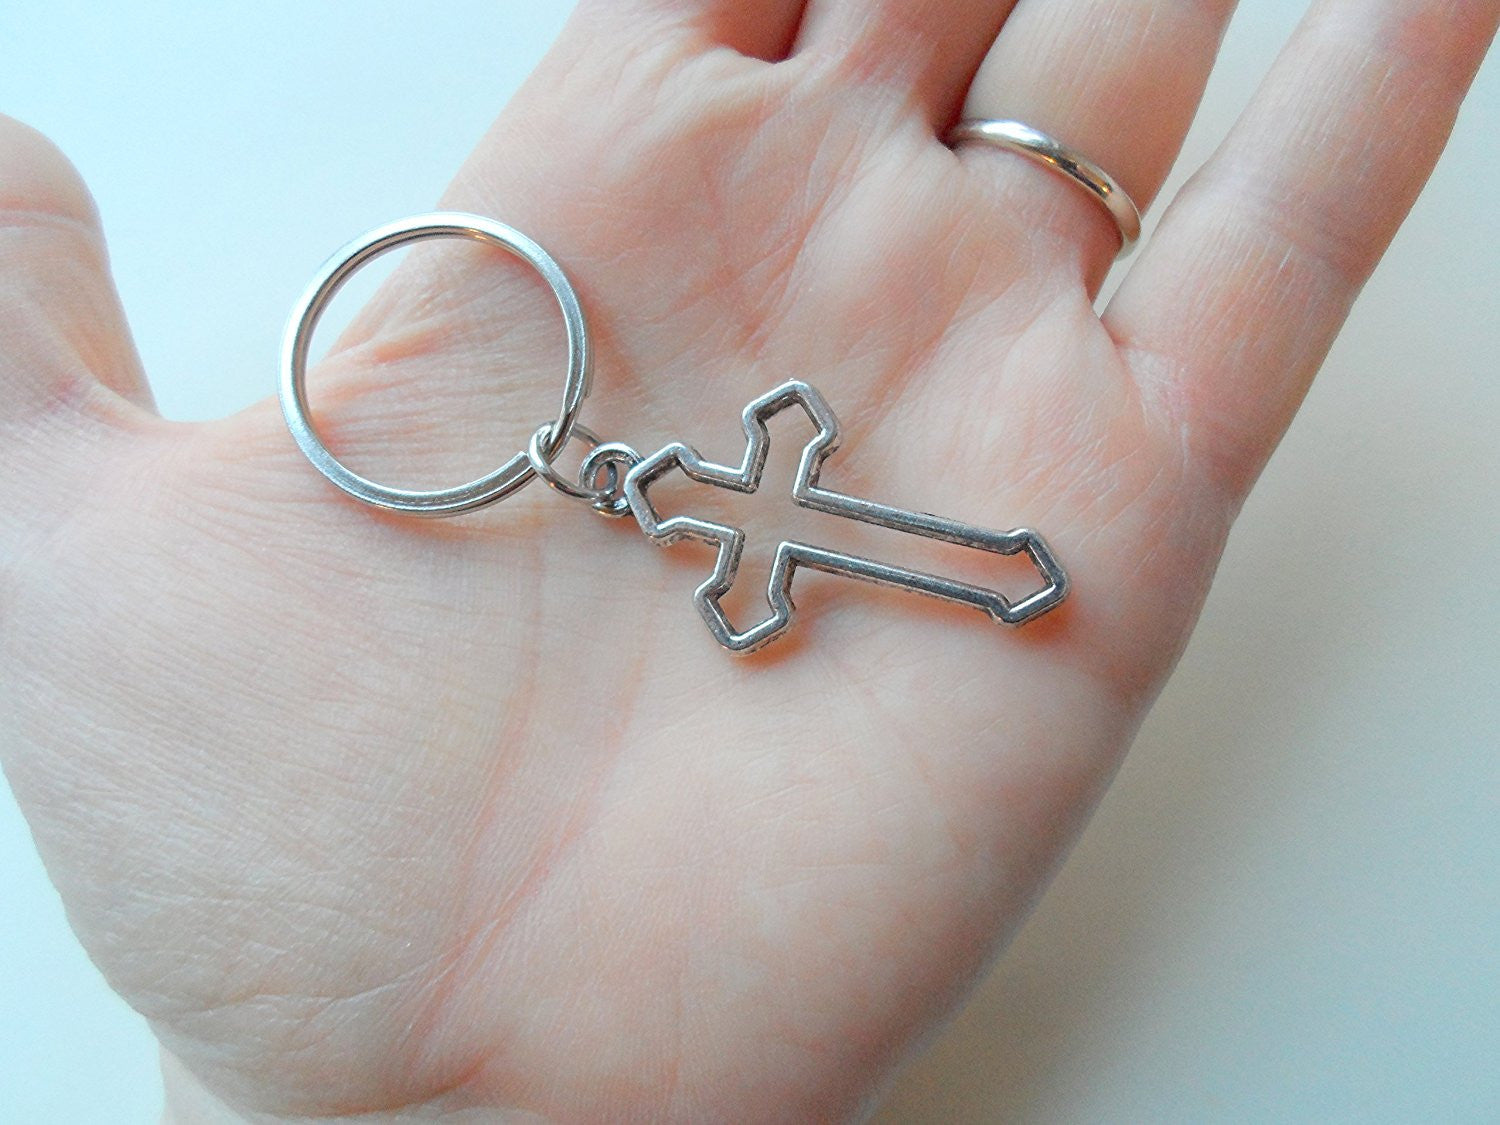 Cross Keychain, Stainless Steel Keychain With Clip, Silver Cross Charm,  Custom Cross Key Chain, Religious Keychain, Christian Small Cross 